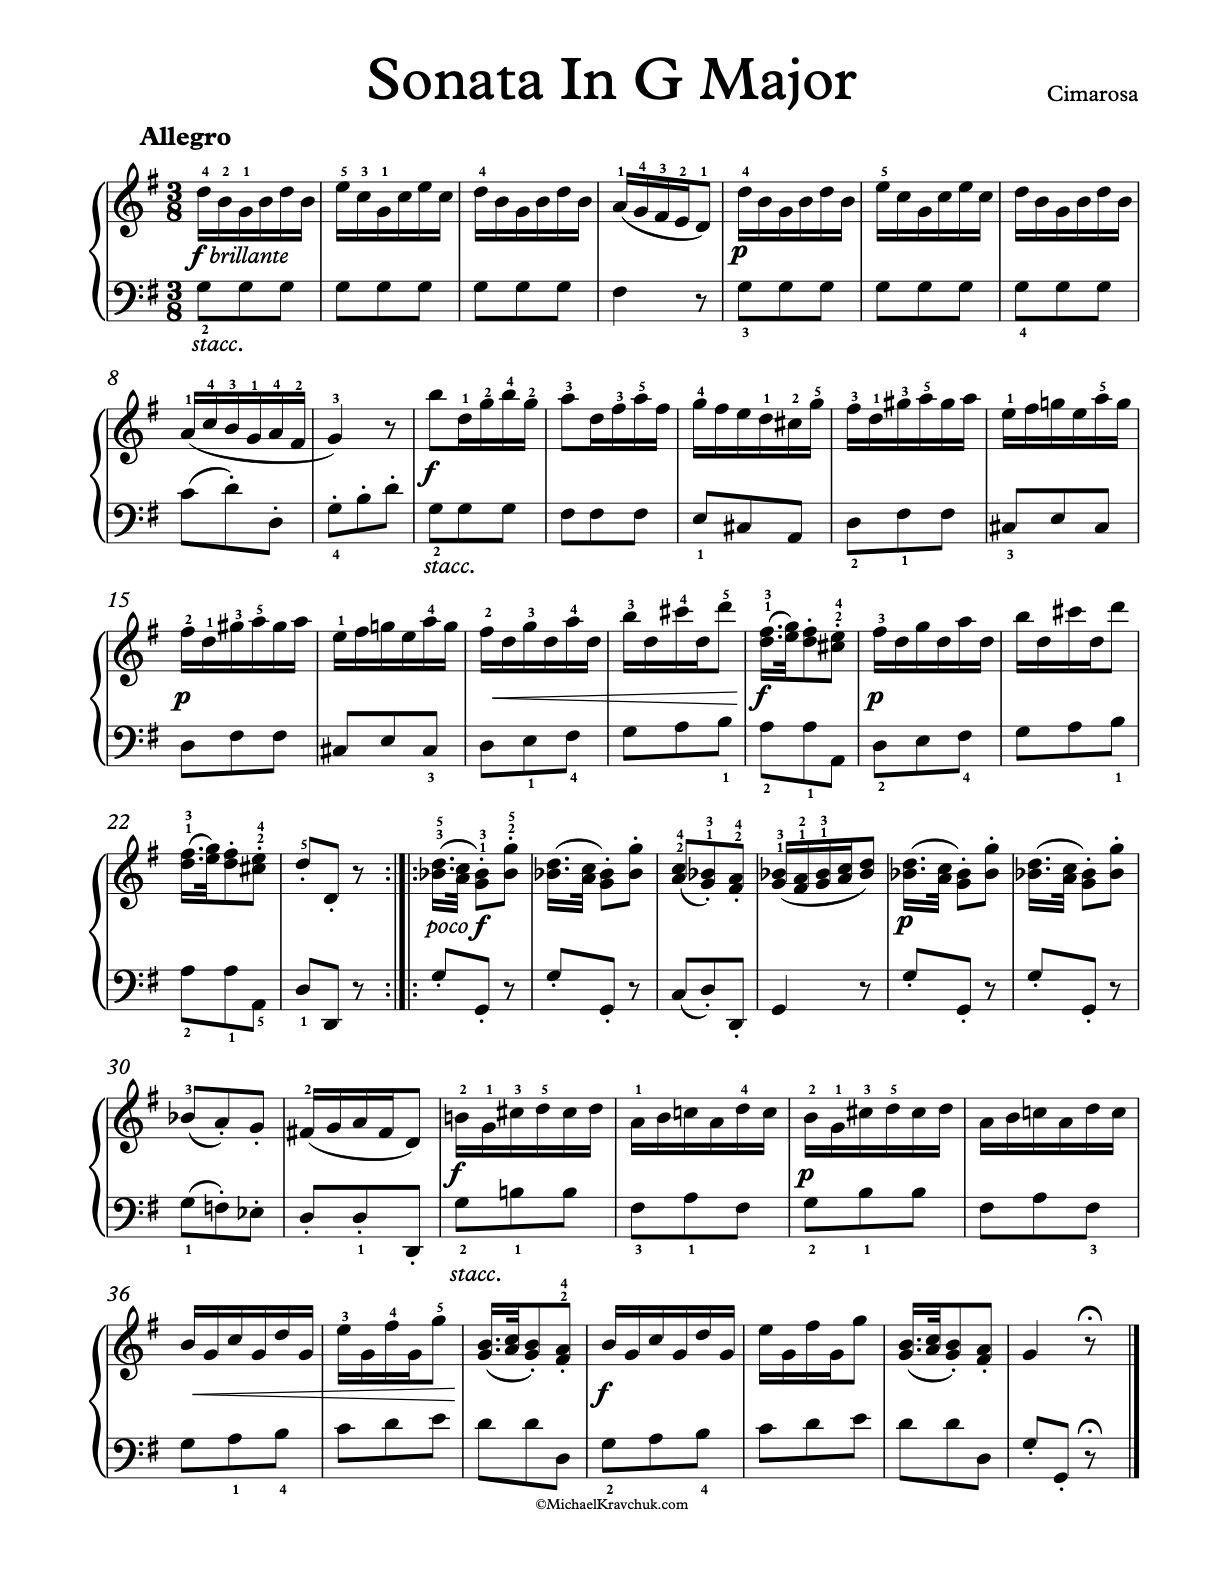 Sonata in G Major Piano Sheet Music